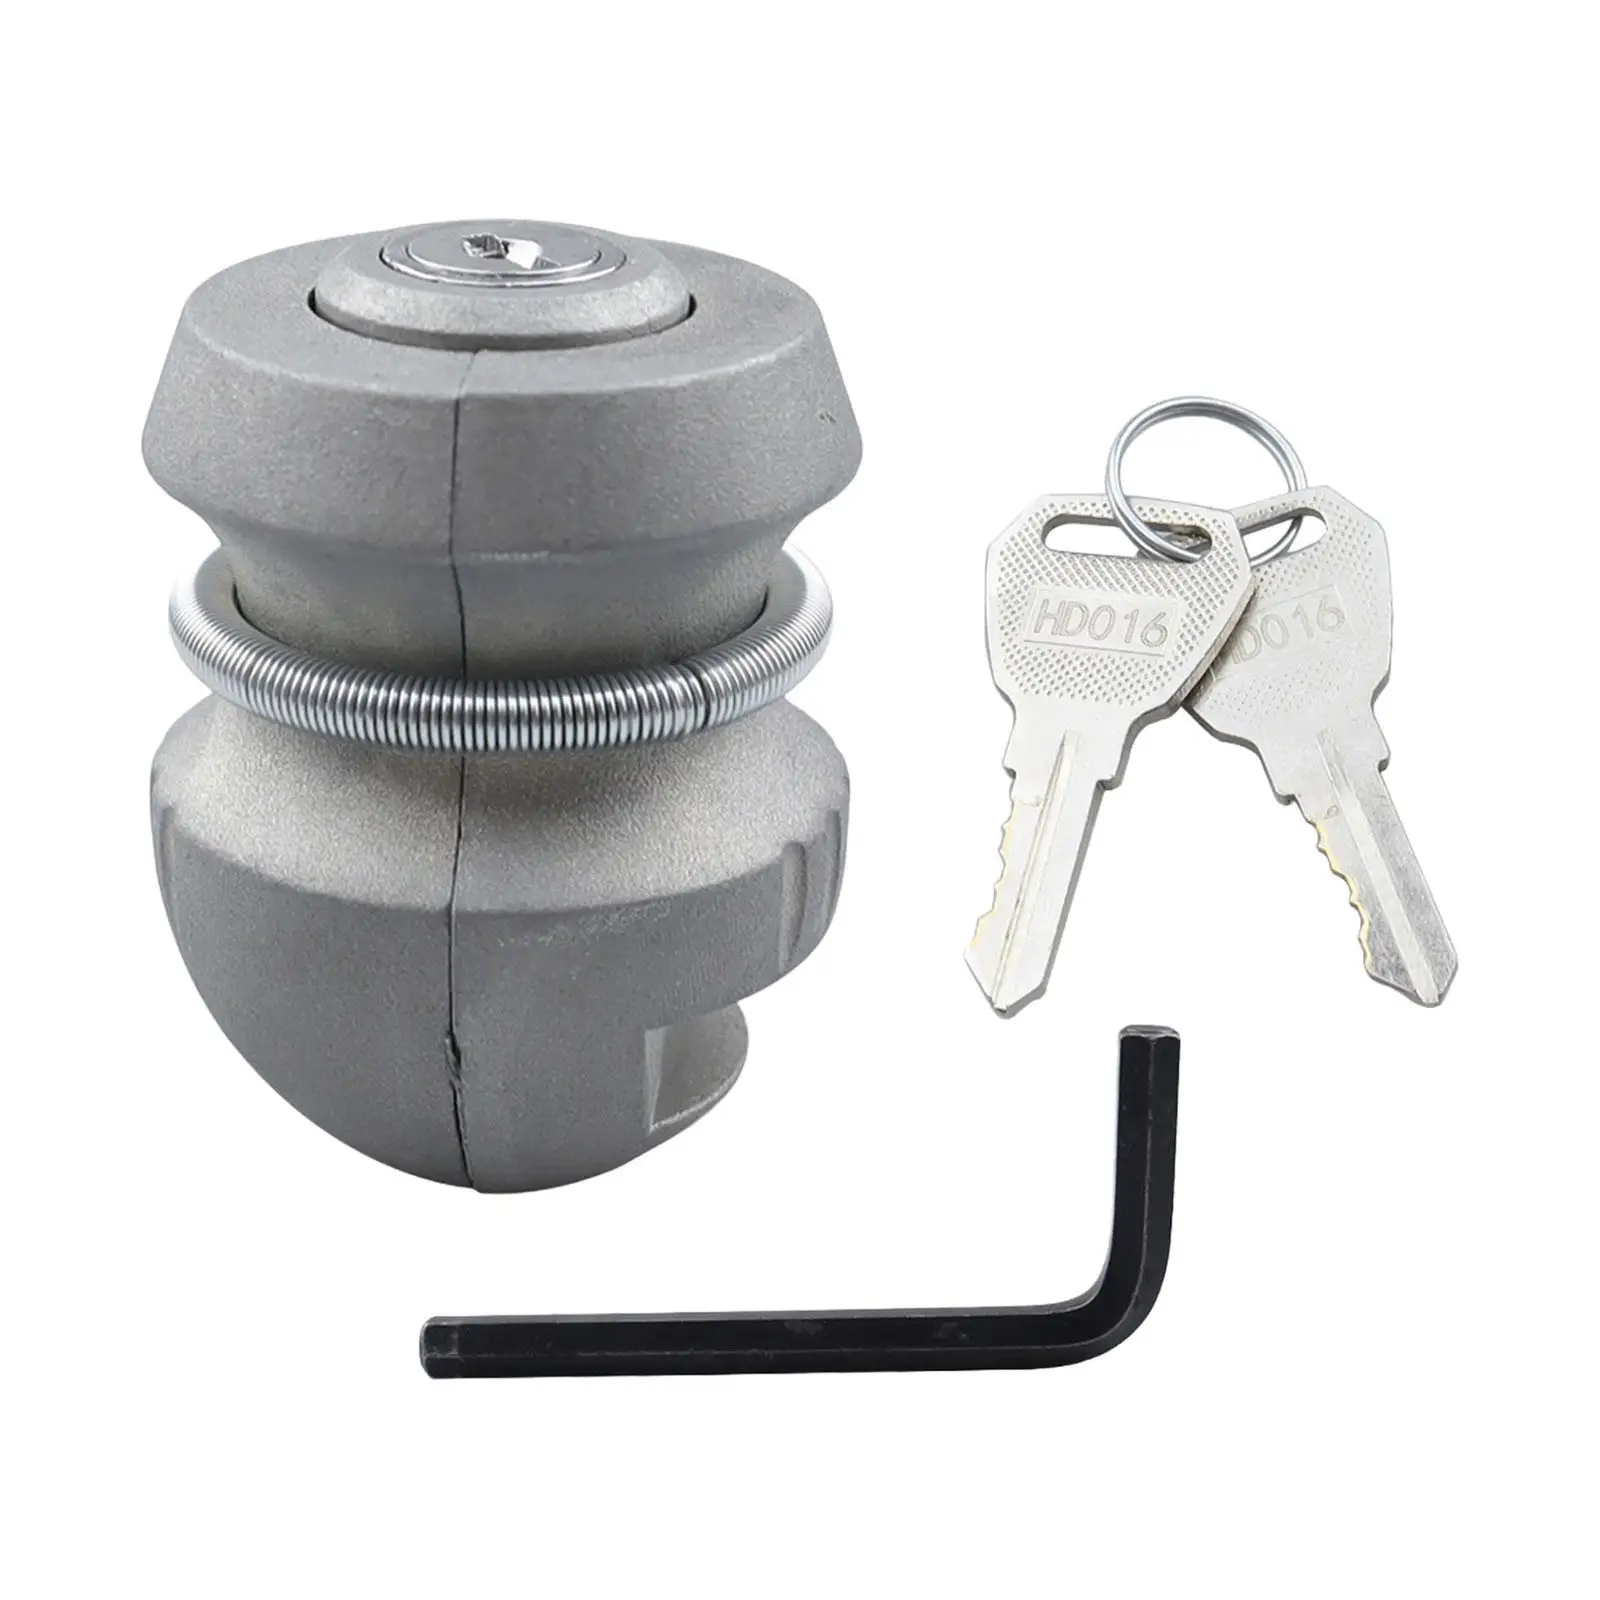 Trailer Part Coupling Lock Practical Metal Trailer Lock Hitch Ball Lock Ball Lock Trailer Lock for Premium High Performance